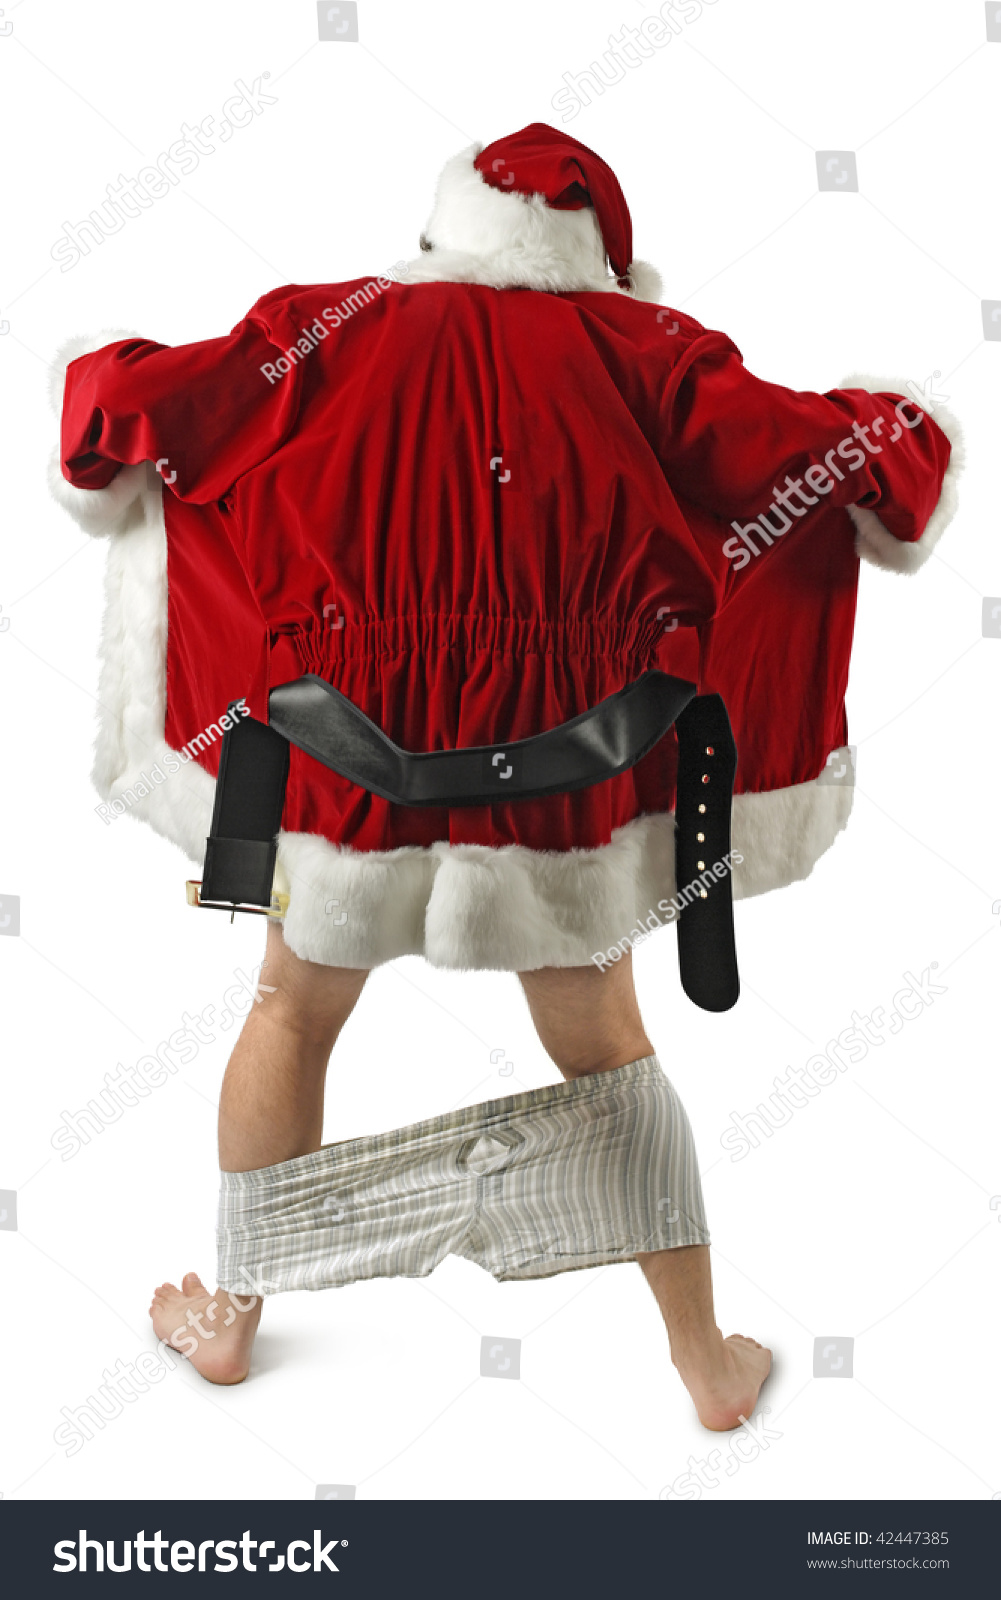 stock-photo-santa-claus-opening-his-coat